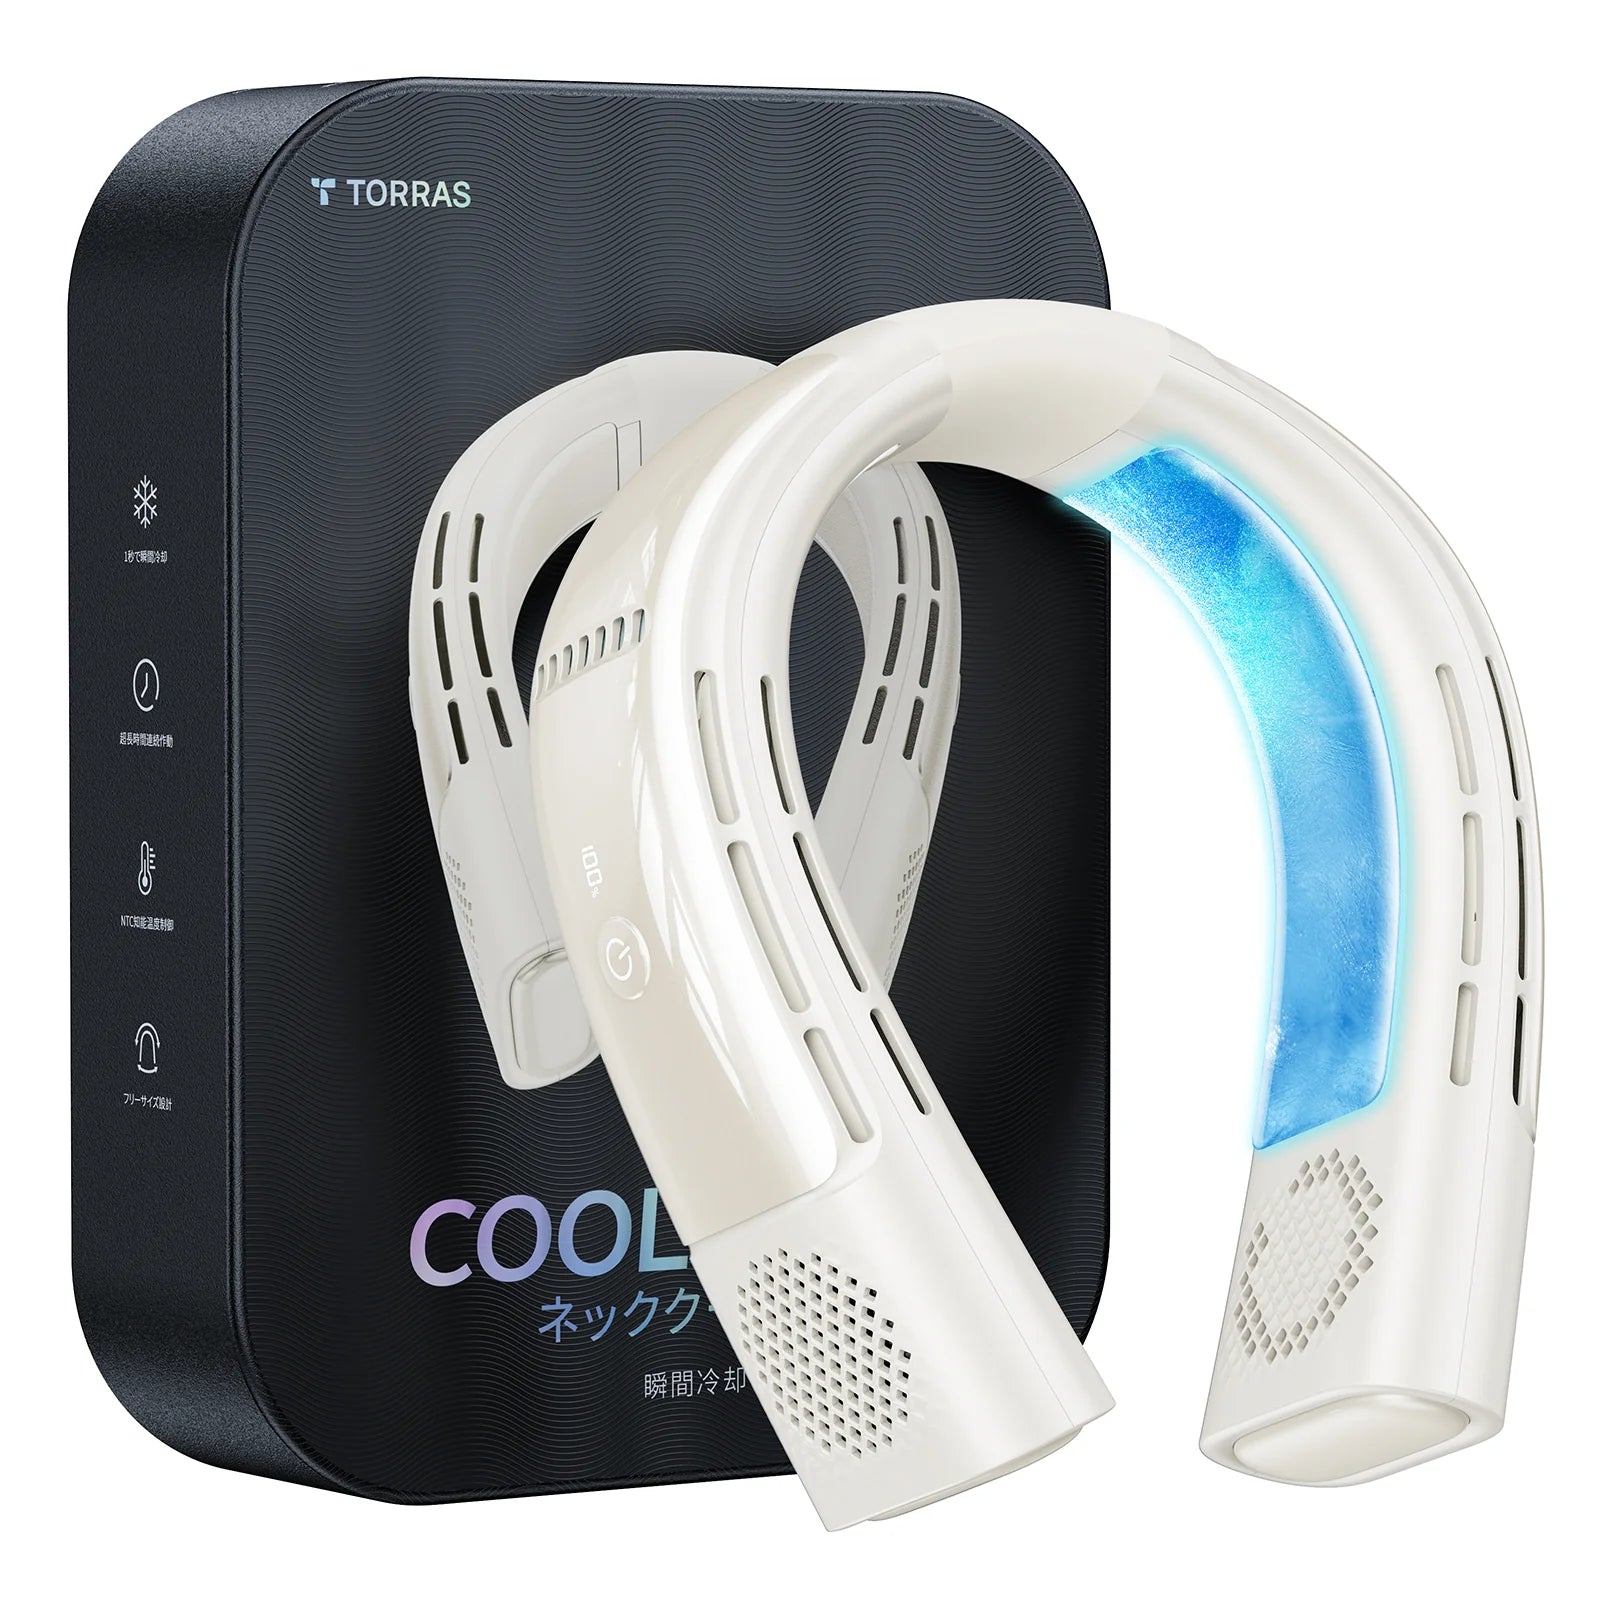 TORRAS Coolify 2S - Neck Air Conditioner